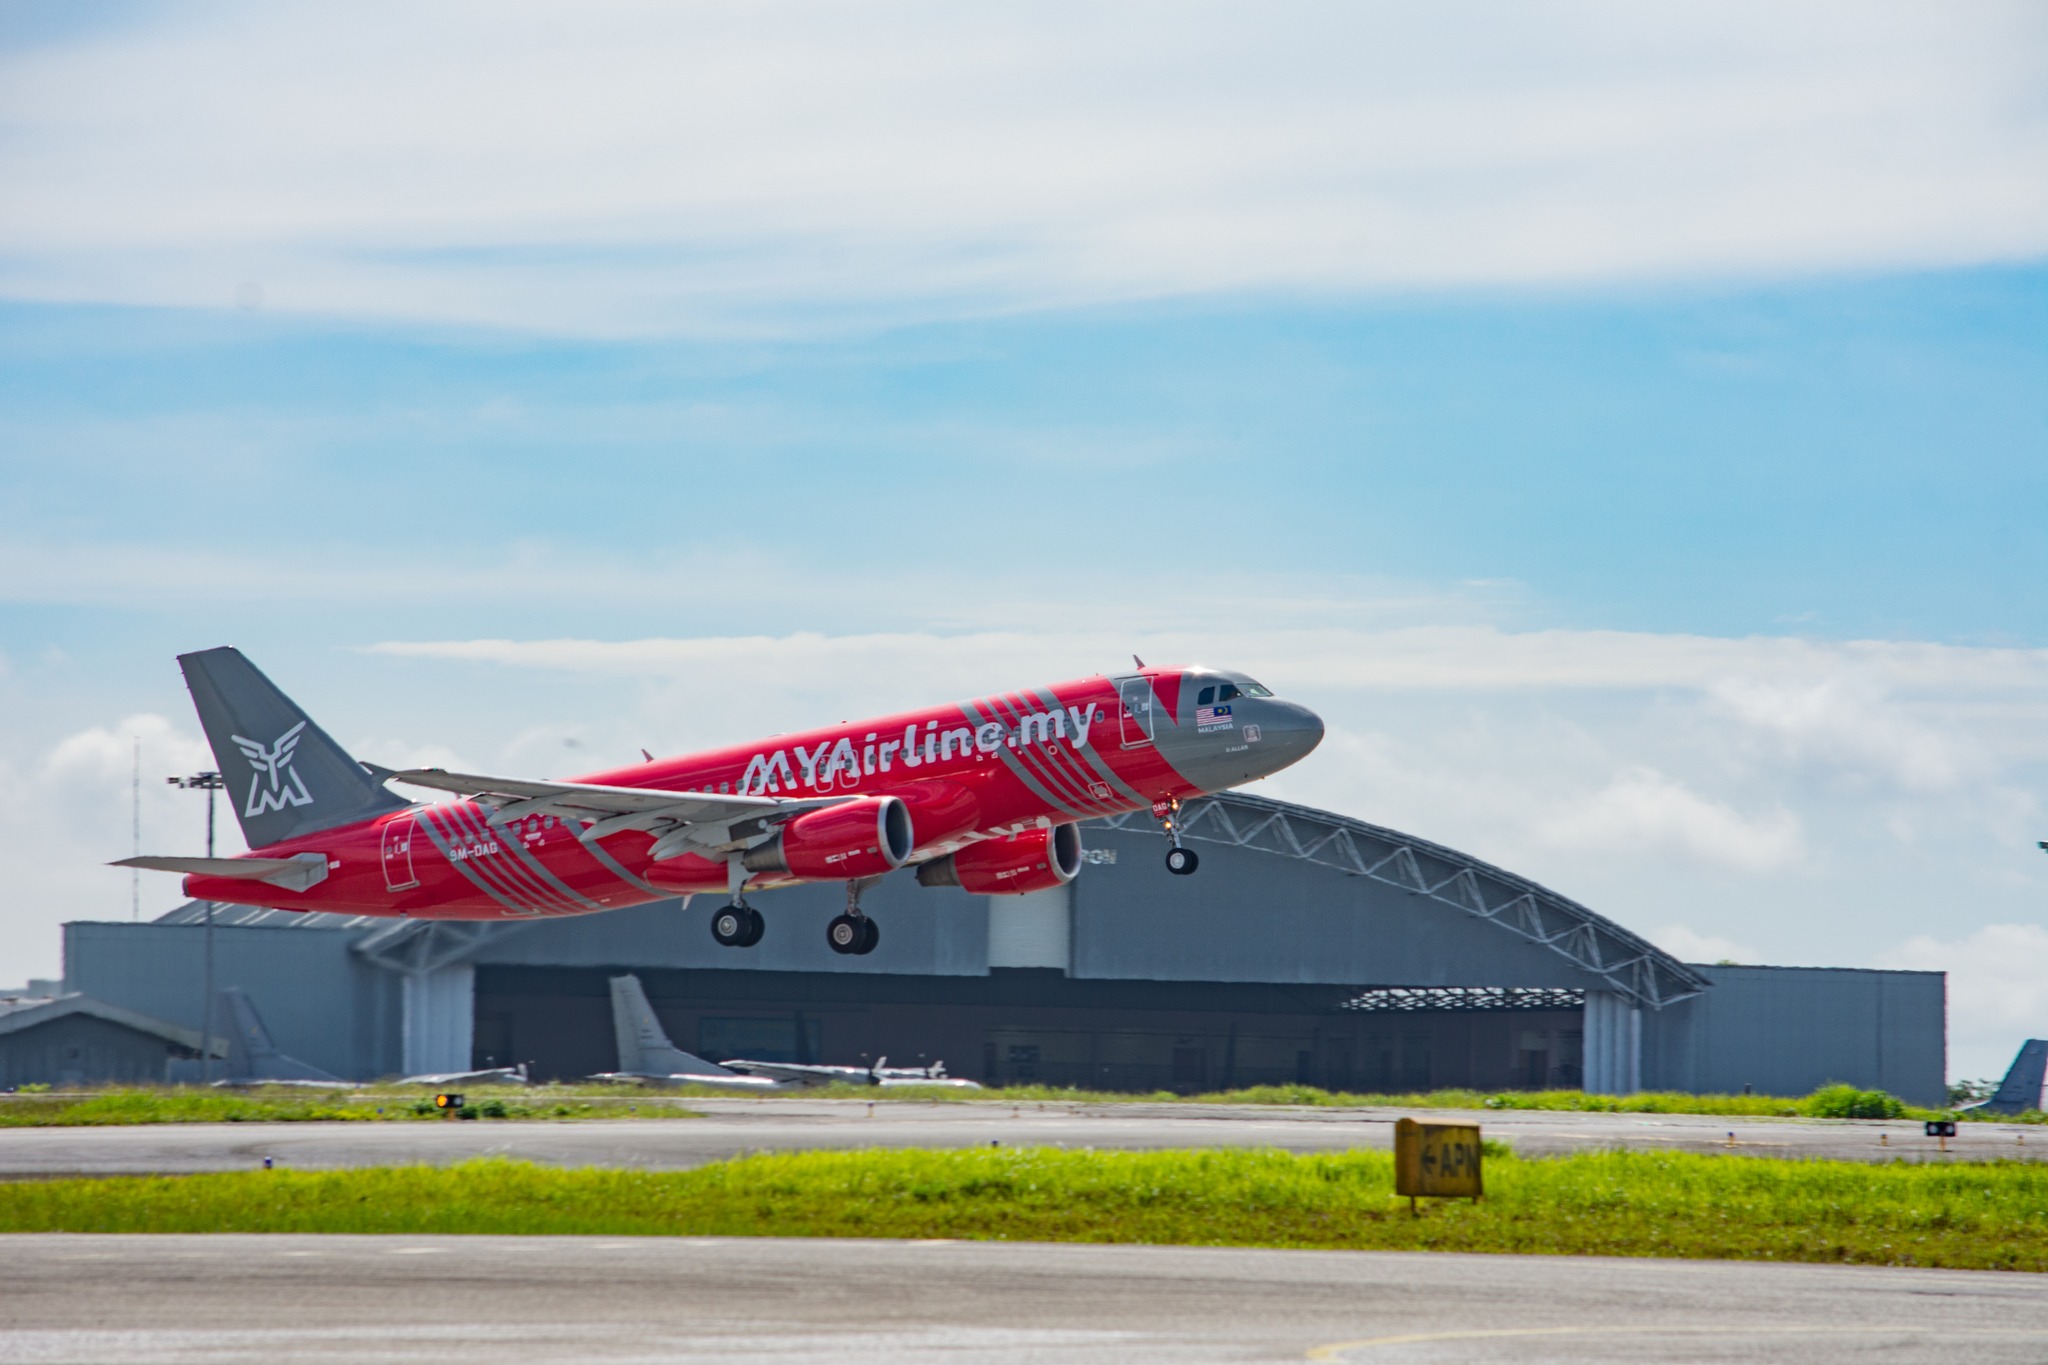 MYAirline marks its presence with inaugural flights to Kuching, KK, Langkawi - Focus Malaysia